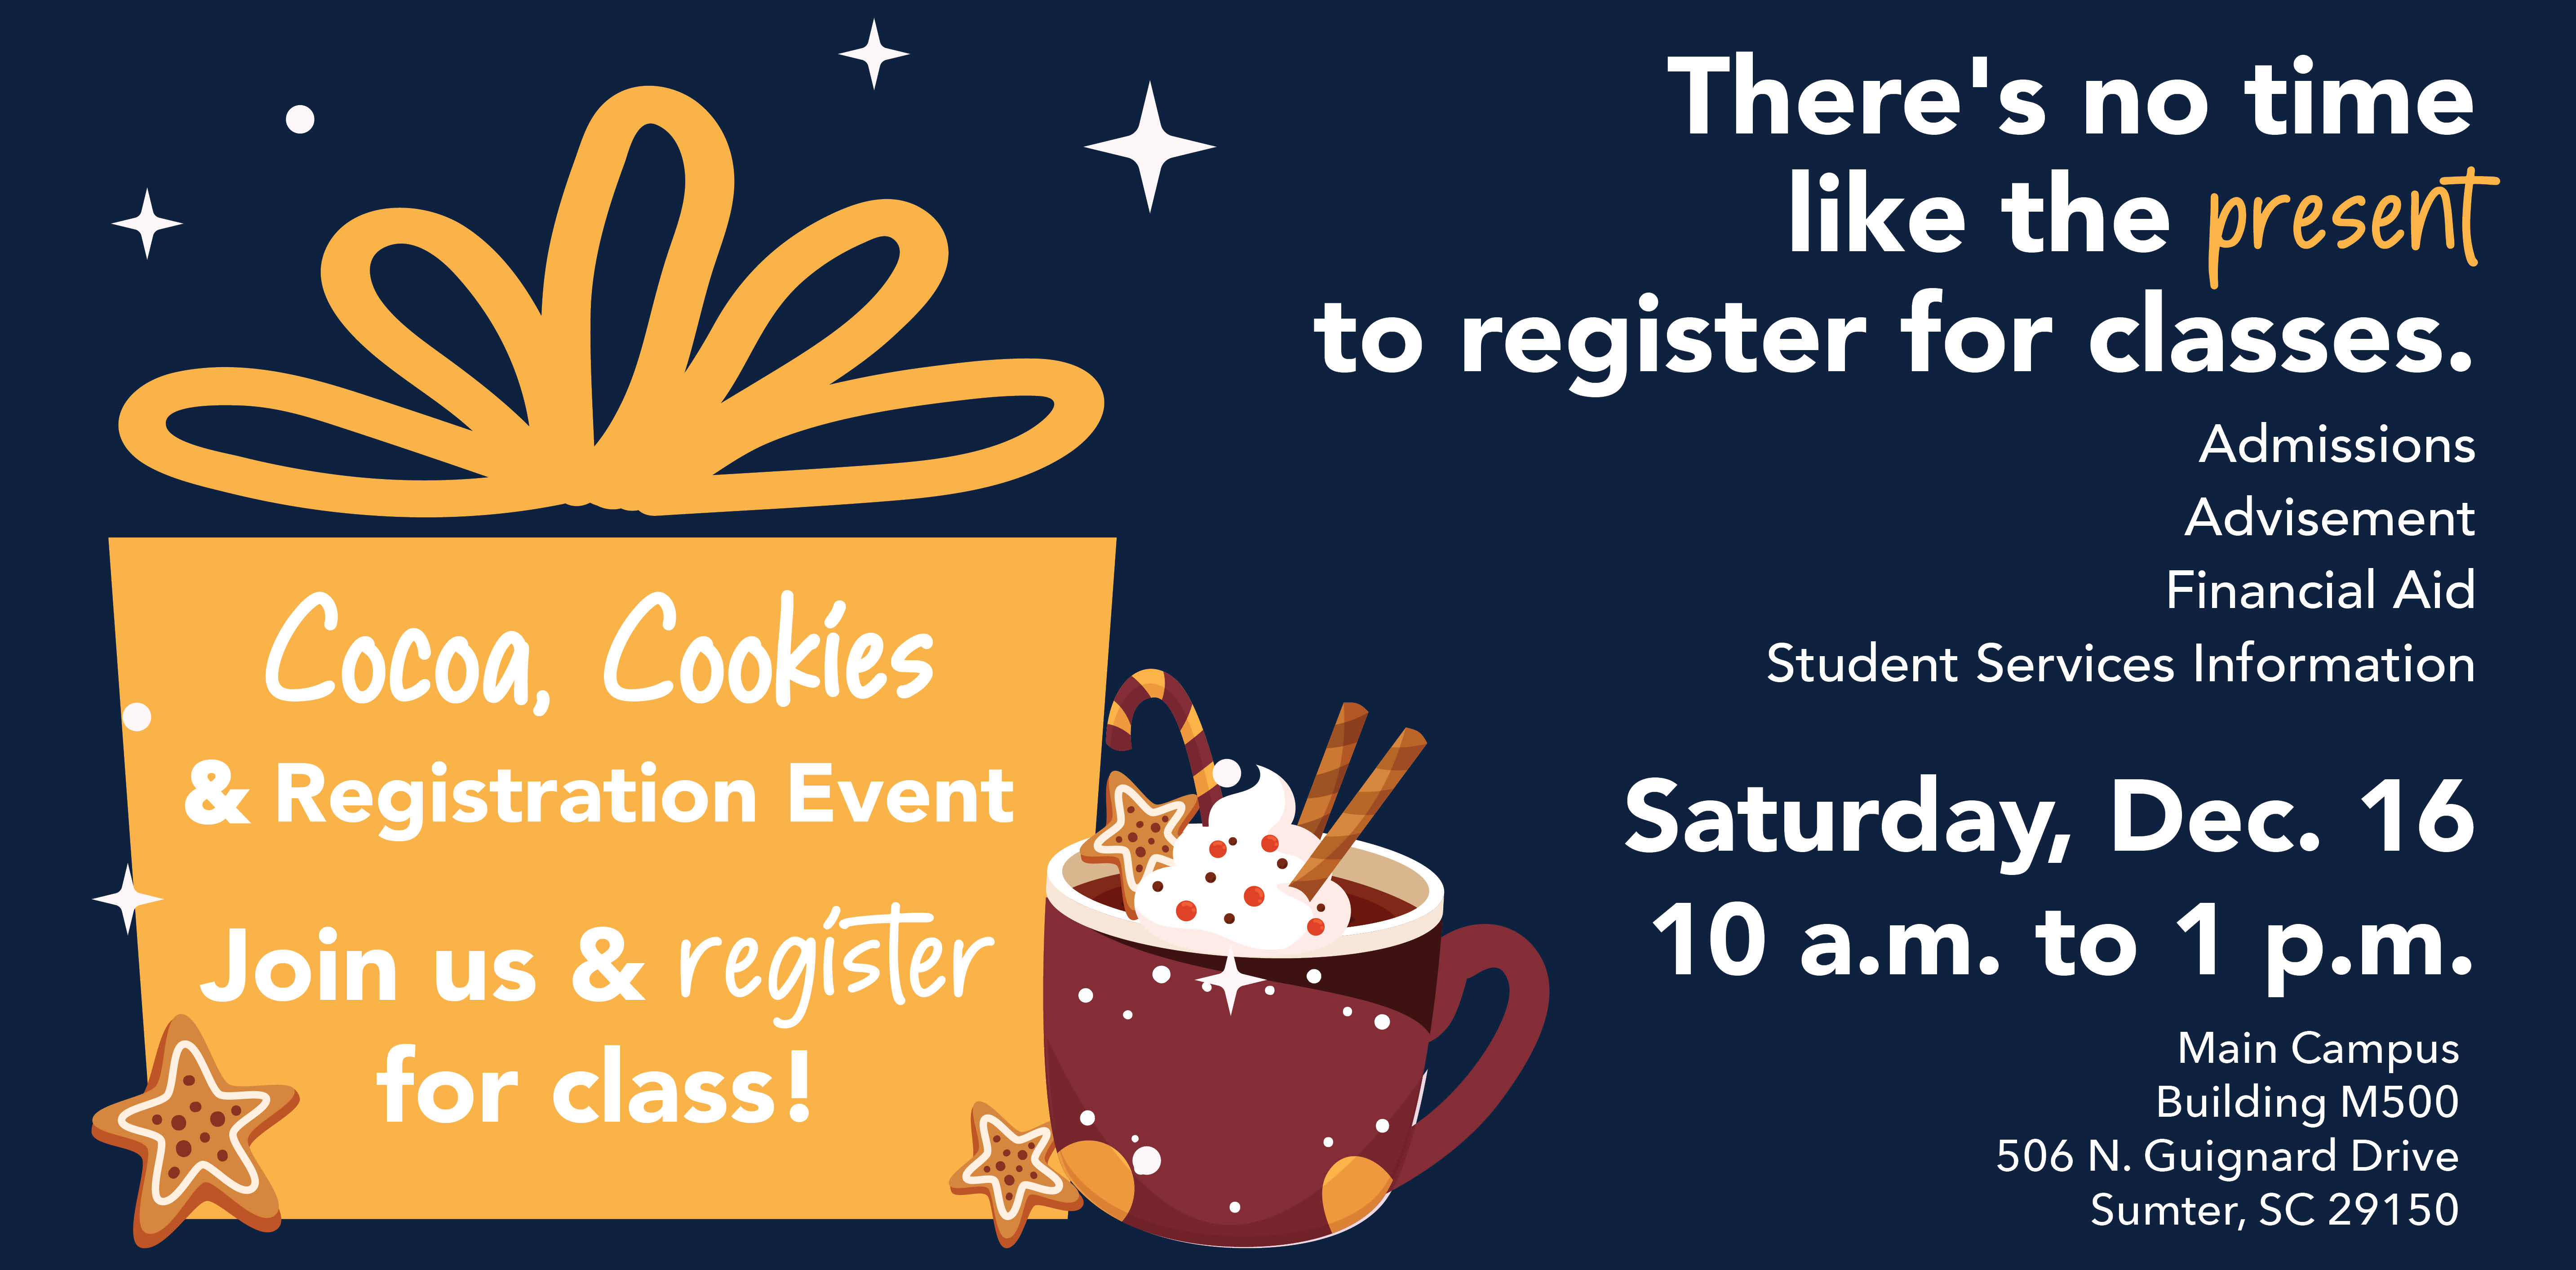 Cocoa, Cookies, & Registration event